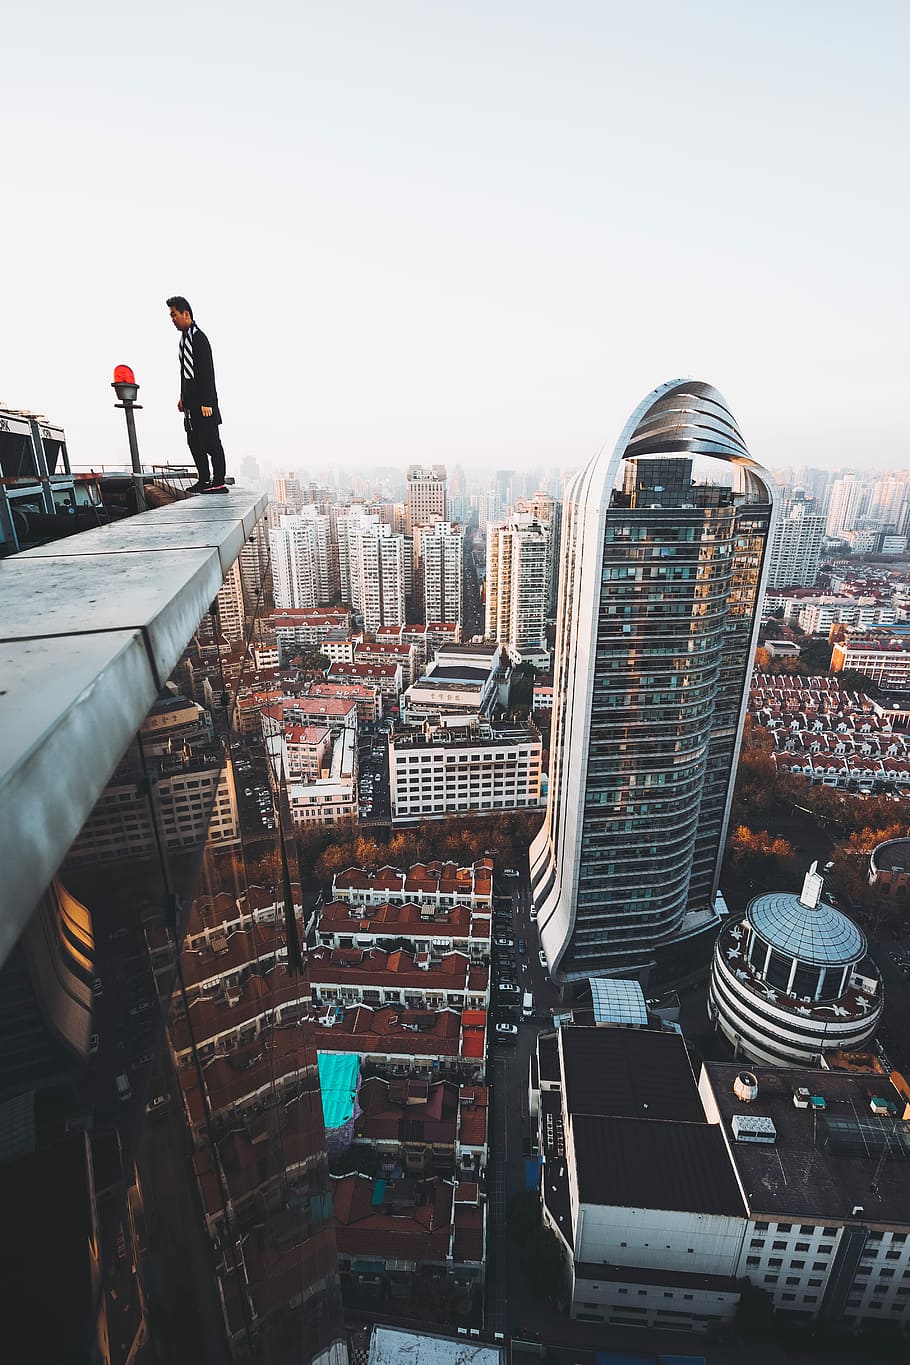 HD wallpaper: Mirror’s Edge, man standing on edge of building's rooftop